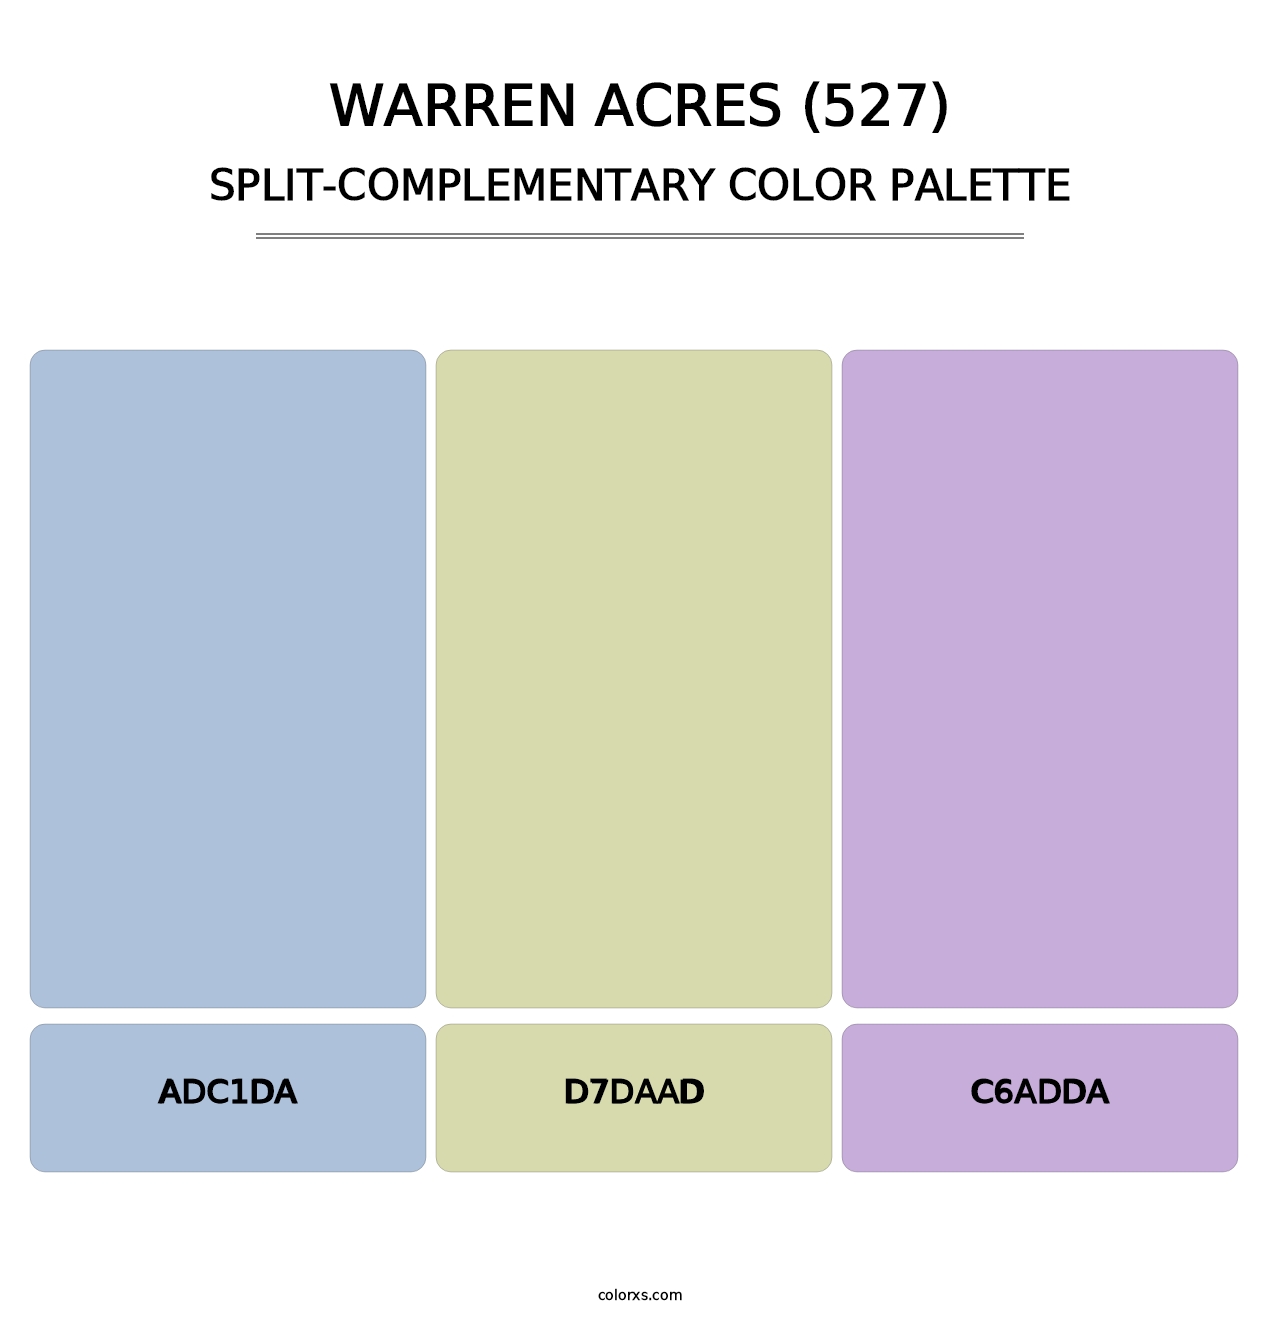 Warren Acres (527) - Split-Complementary Color Palette